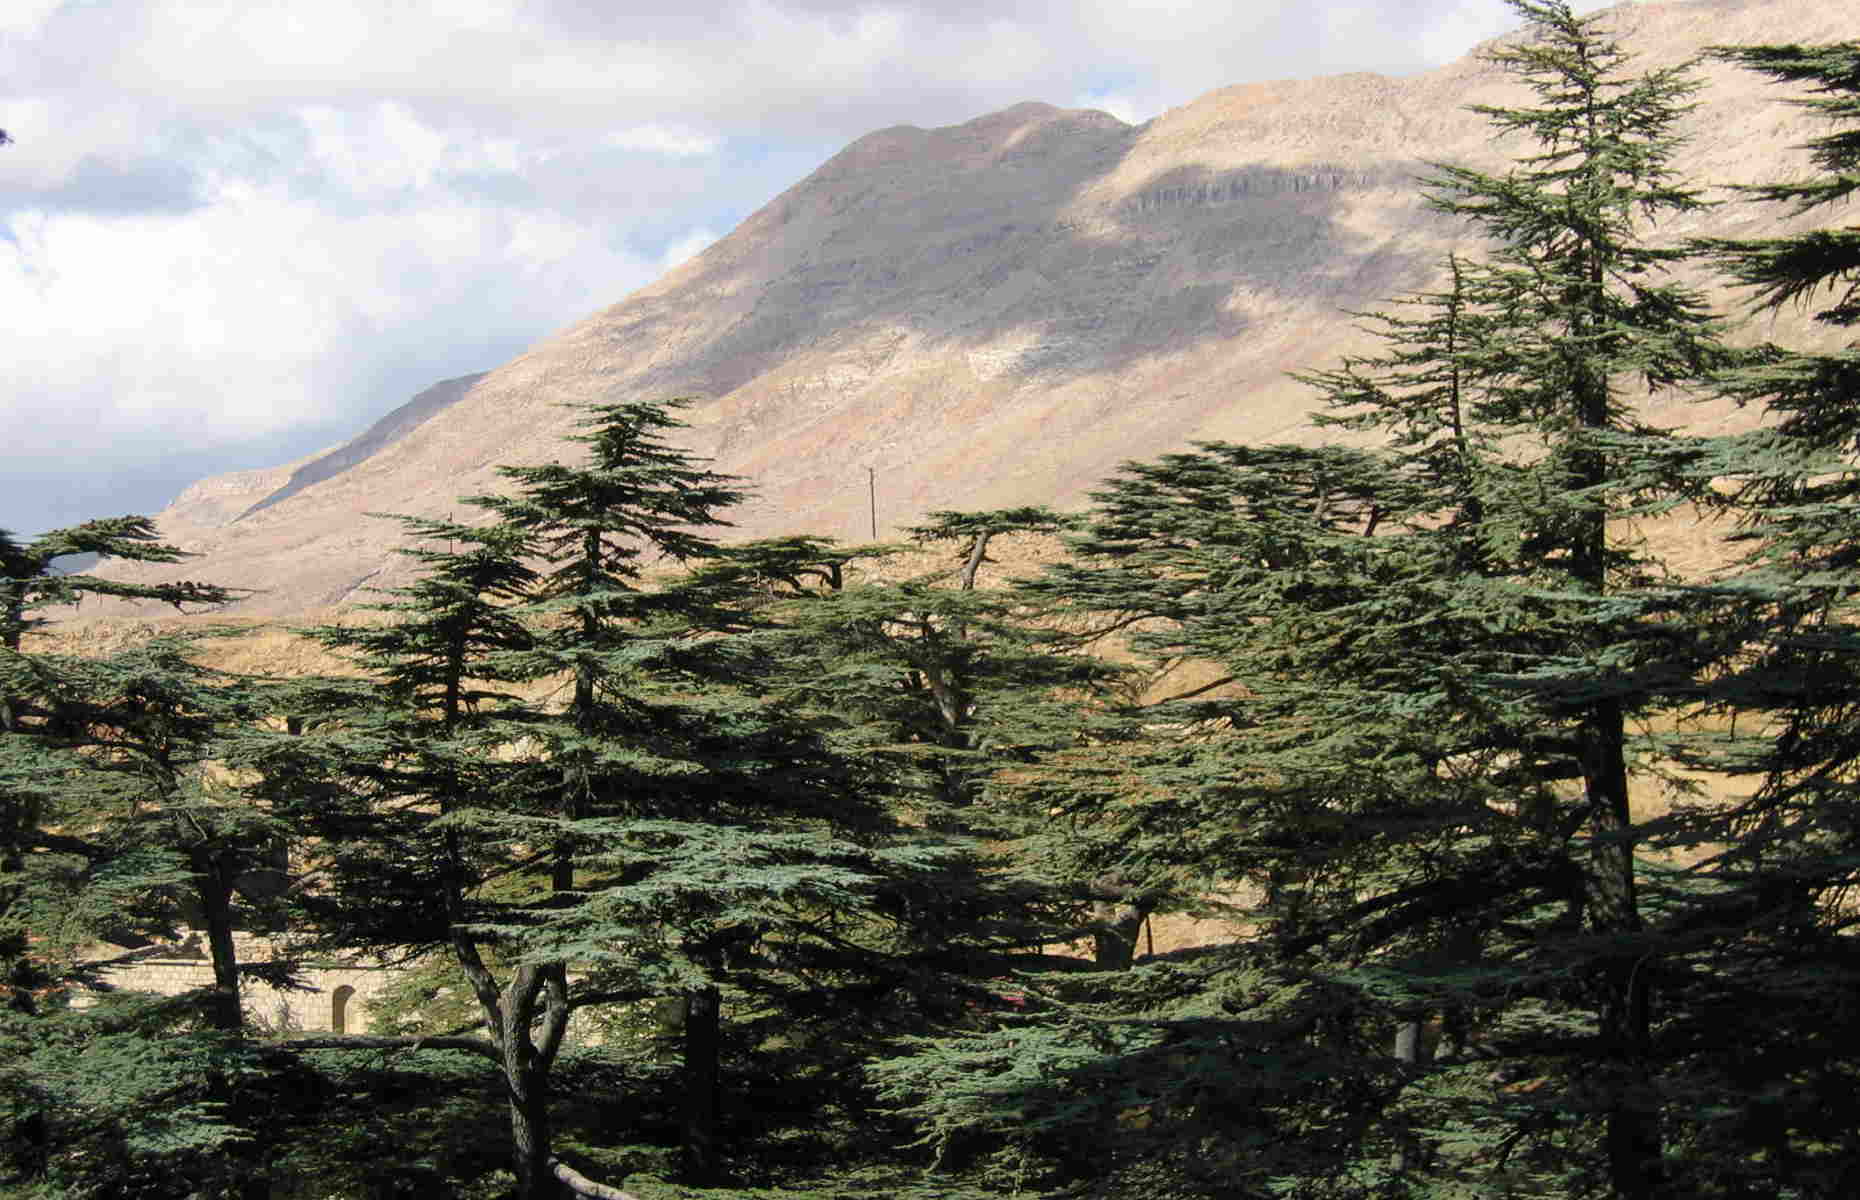 Forêt des Cèdres - Voyage au Liban